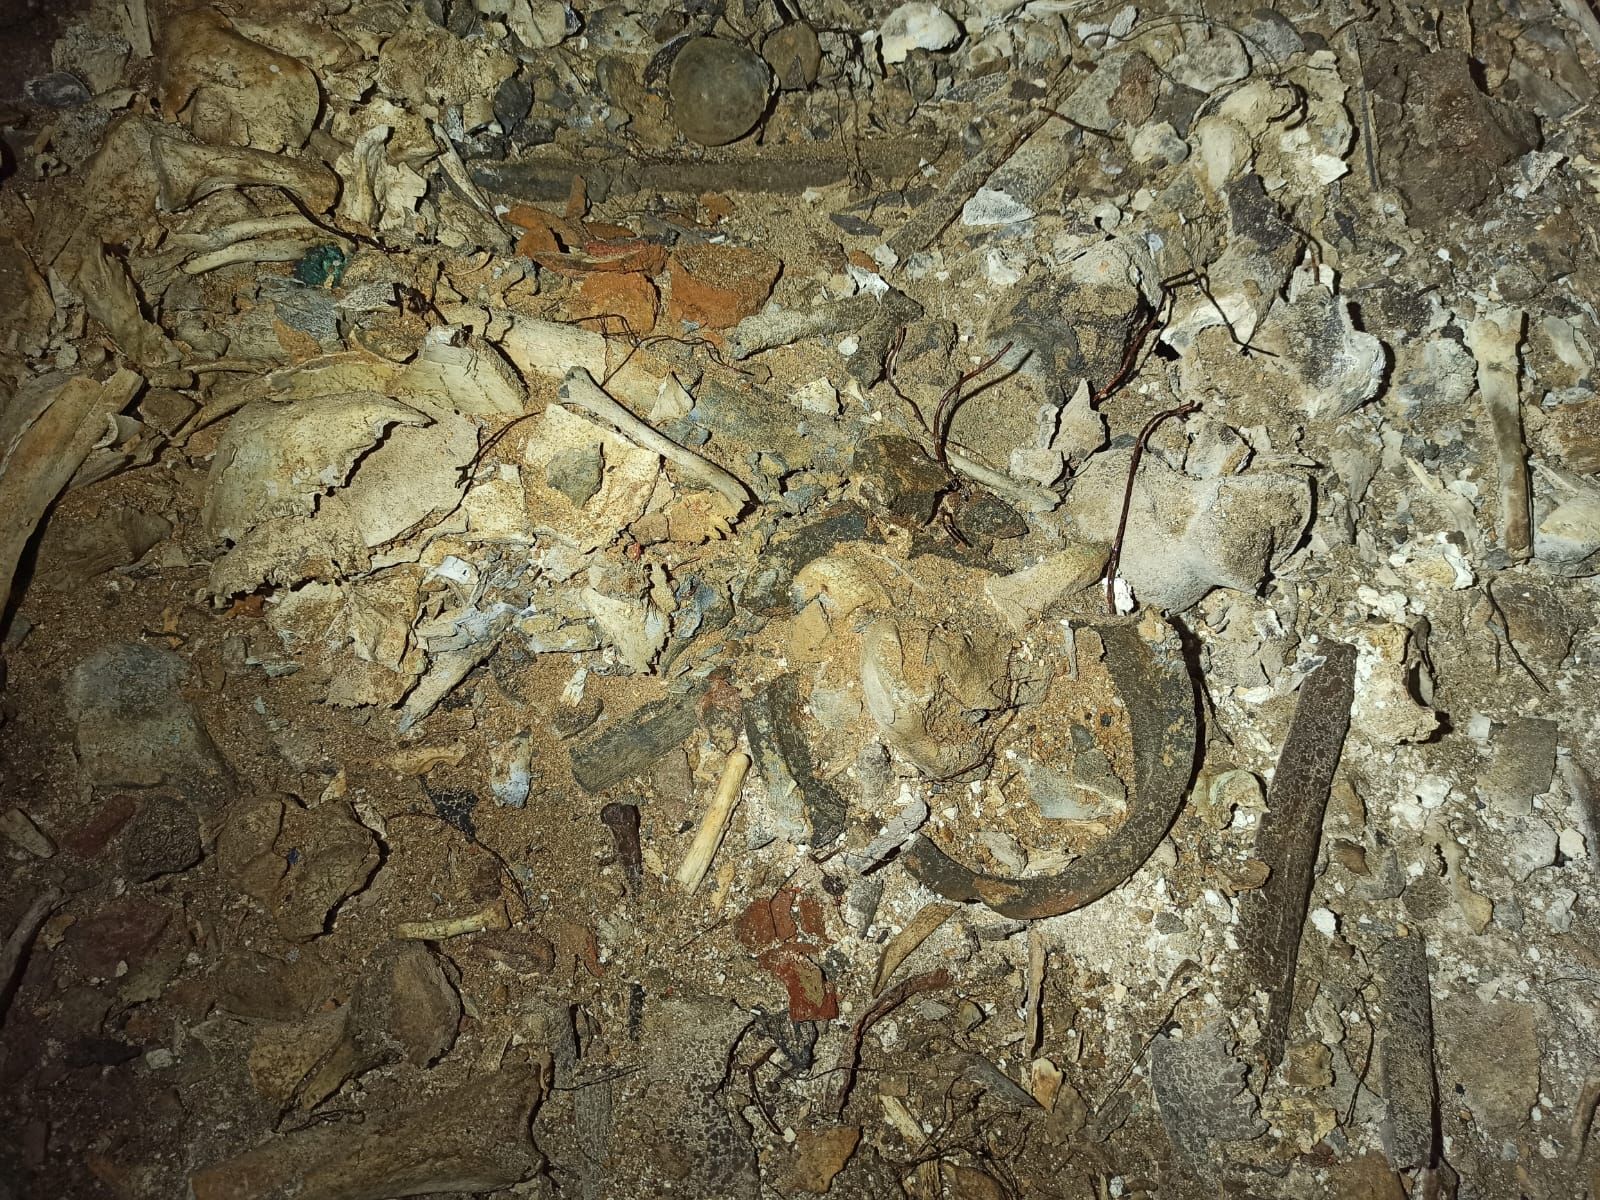 Cueva Serra de Tramuntana enterramientos